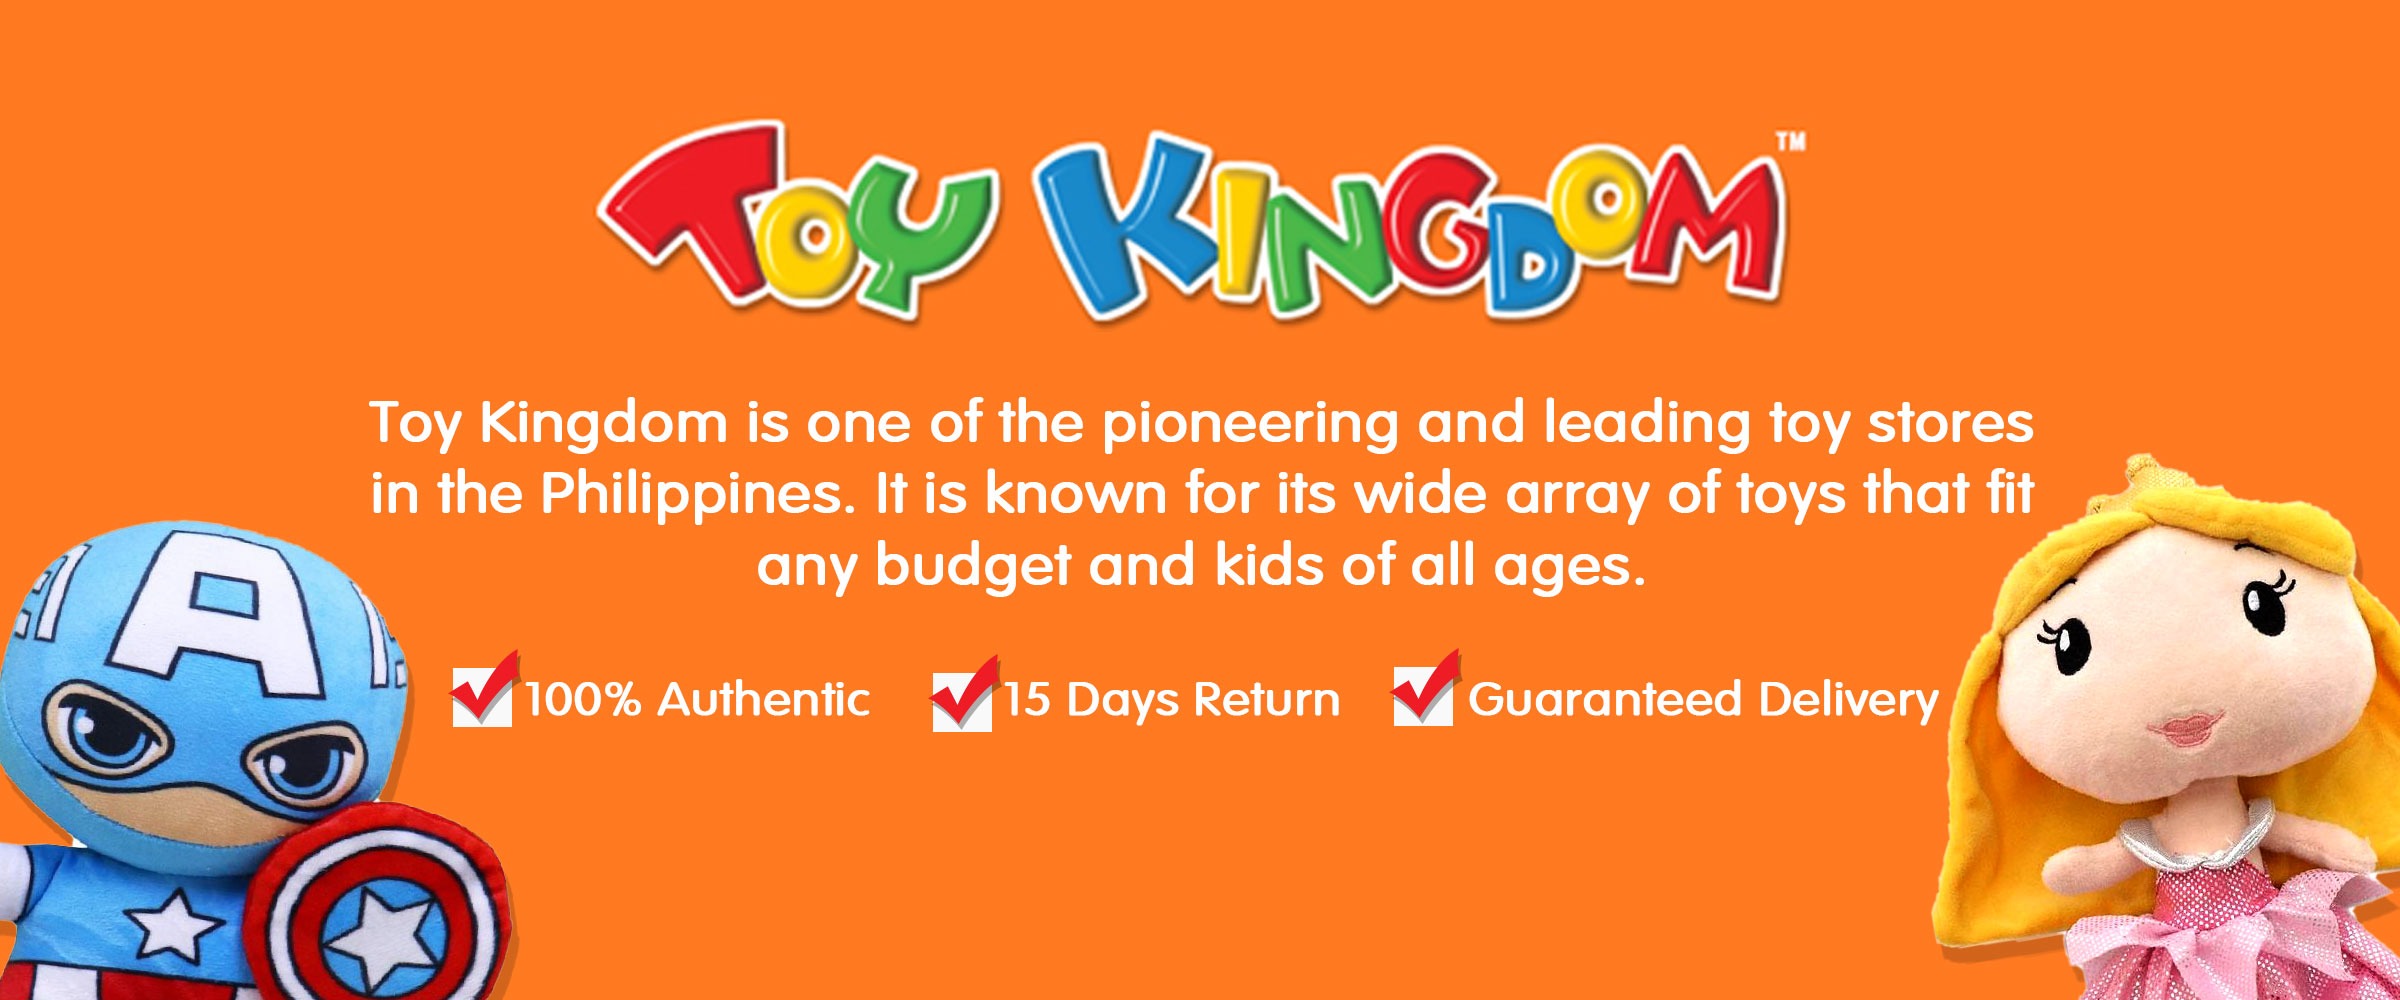 toy kingdom online shopping